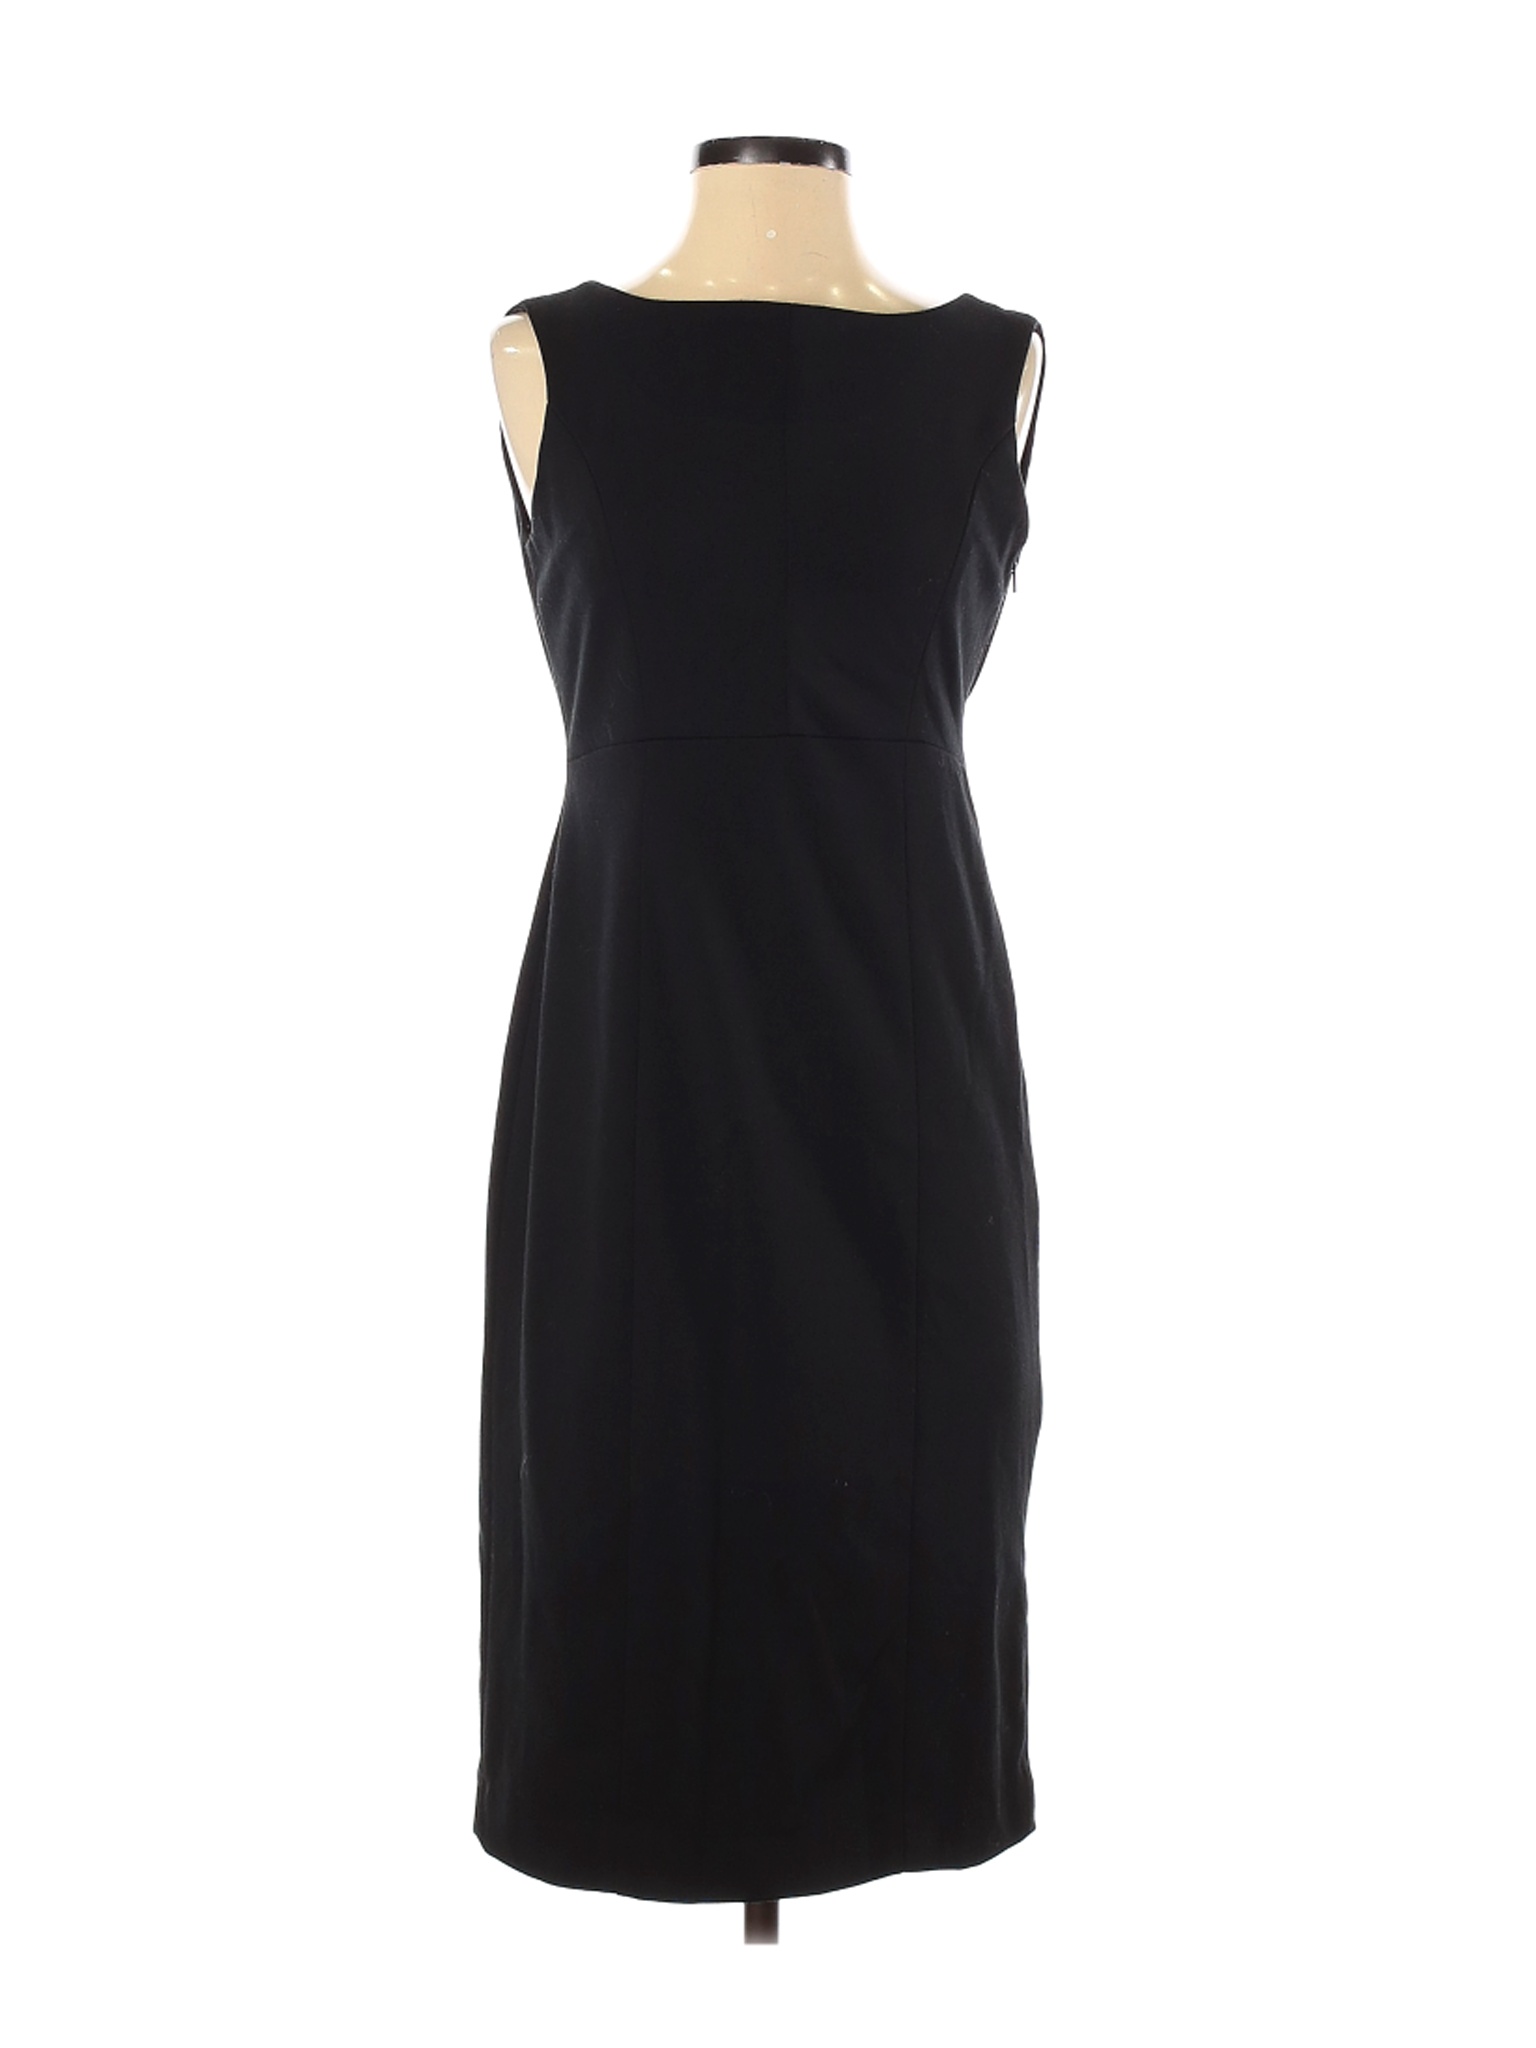 Banana Republic Factory Store Women Black Casual Dress 4 | eBay